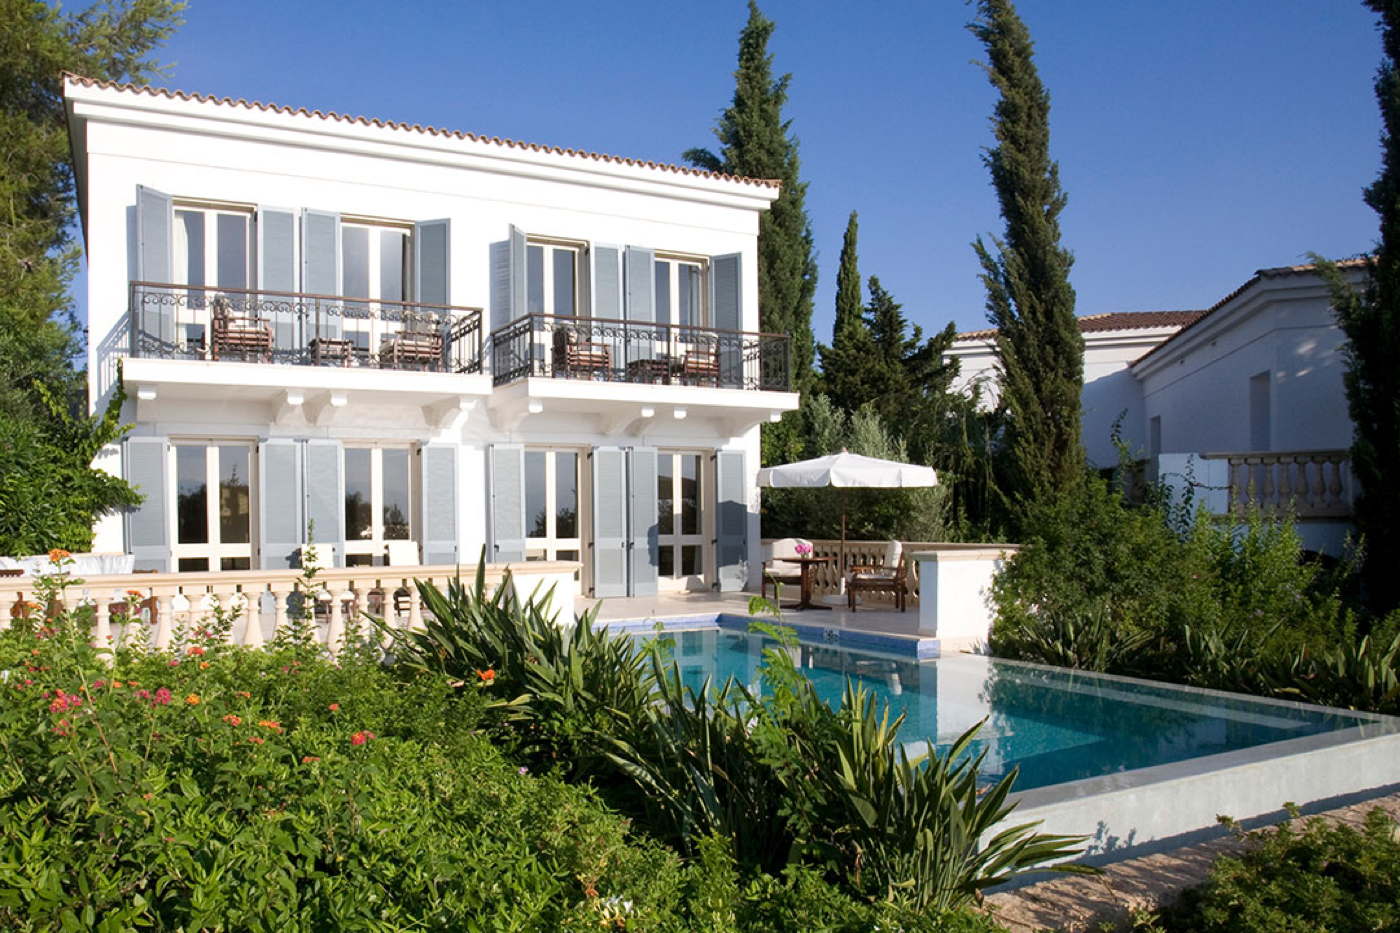 luxury holiday villa-infinity pool-barbecue-Cyprus-Neo Chorio